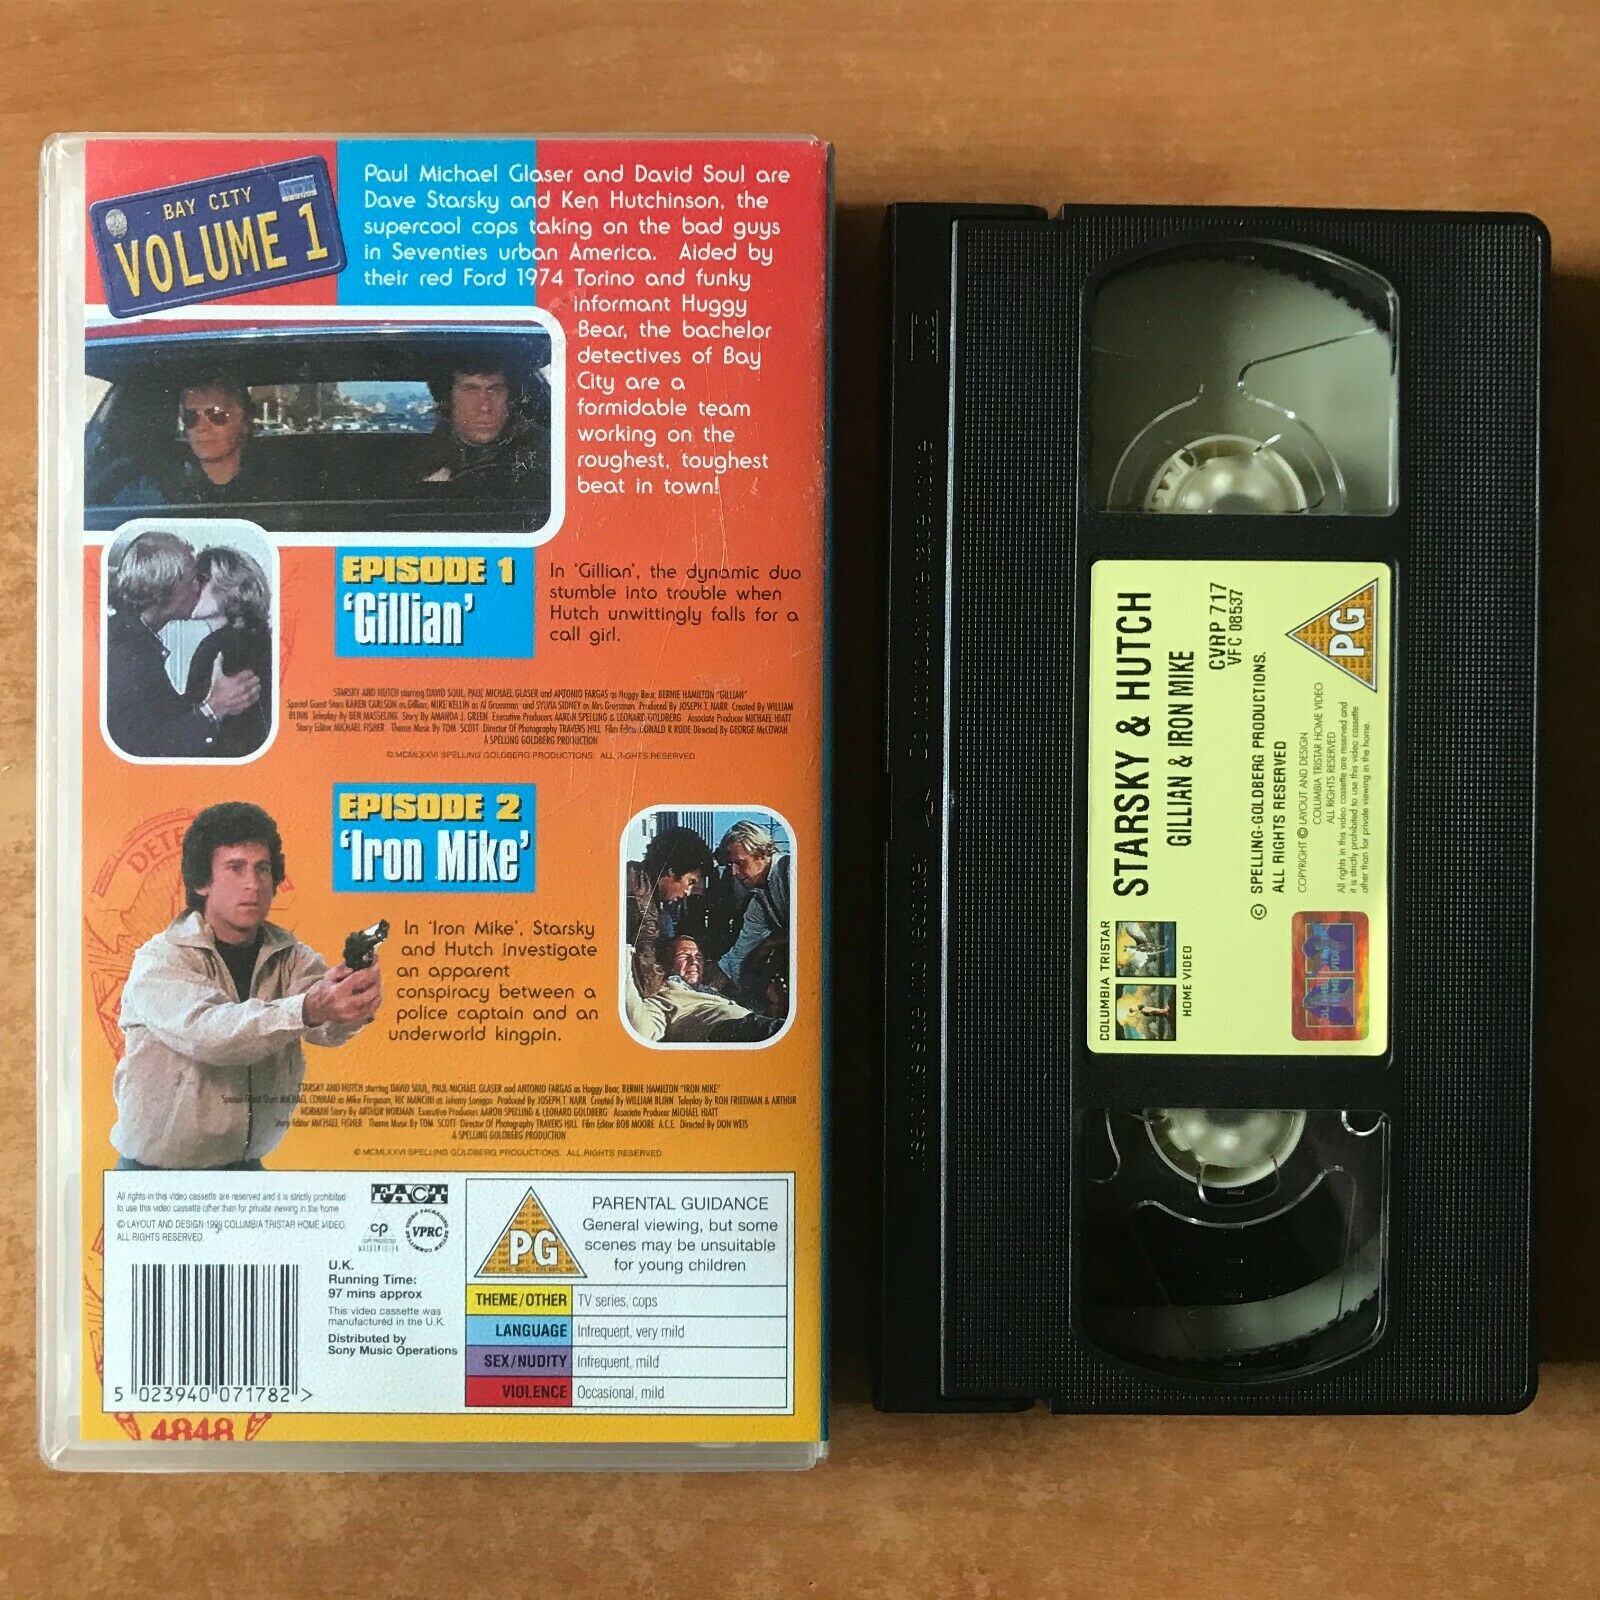 Starsky & Hutch (Vol. 1): "Gillian"; Action Series - Paul Michael Glaser - VHS-